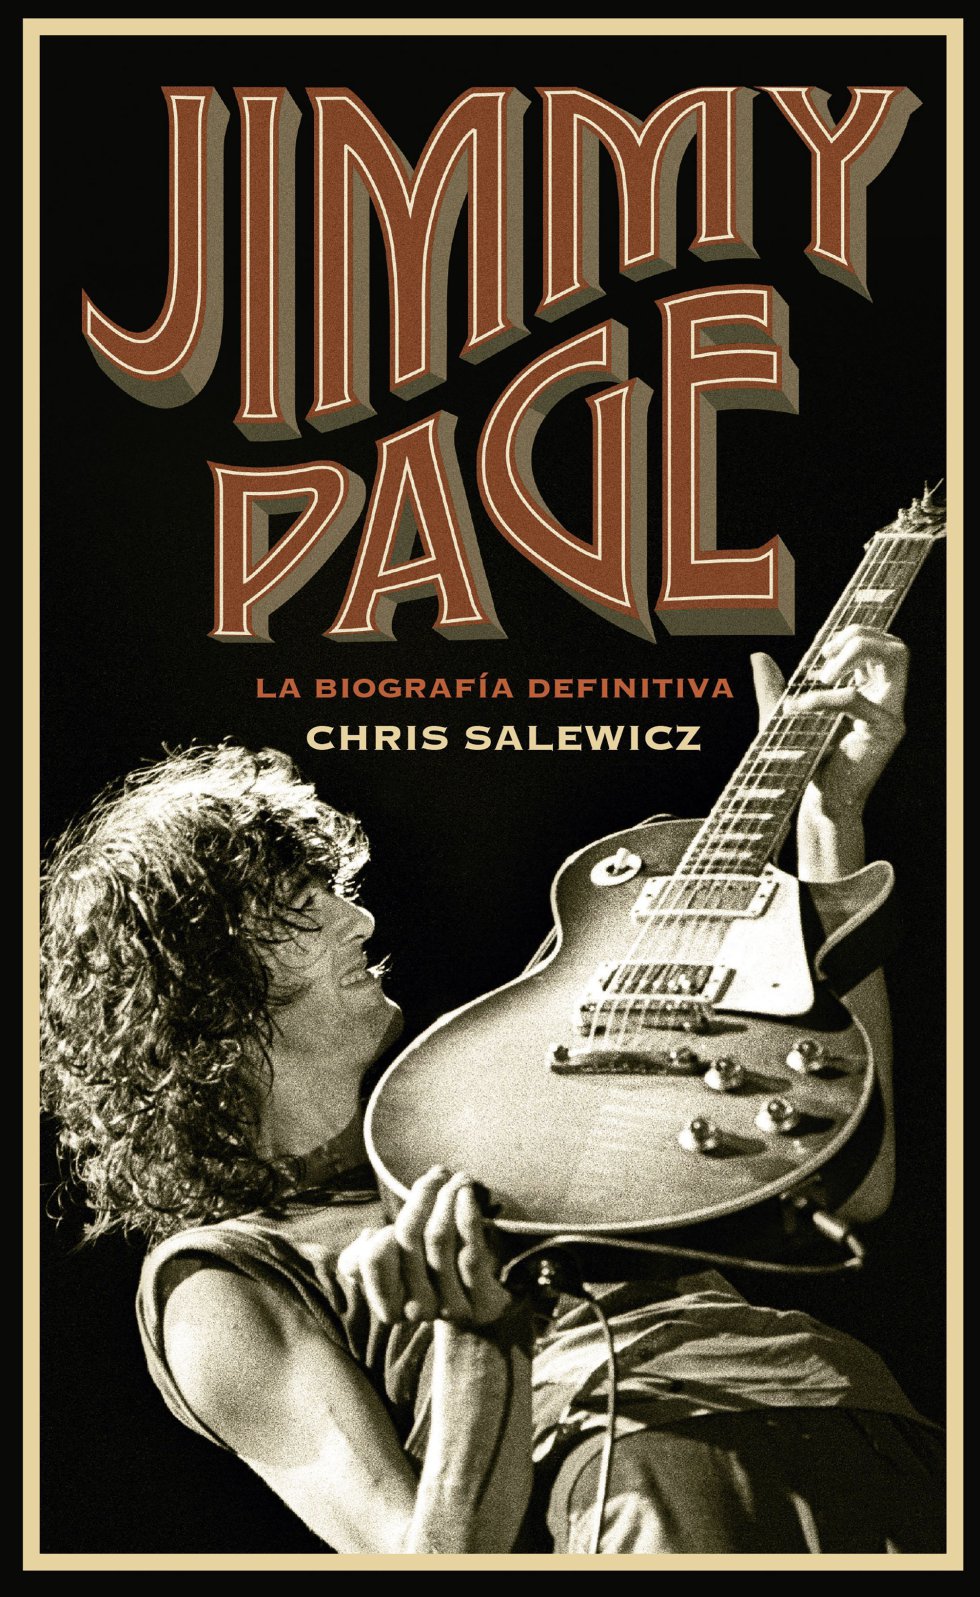 Jimmy Page. La biografía definitiva (Chris Salewicz)